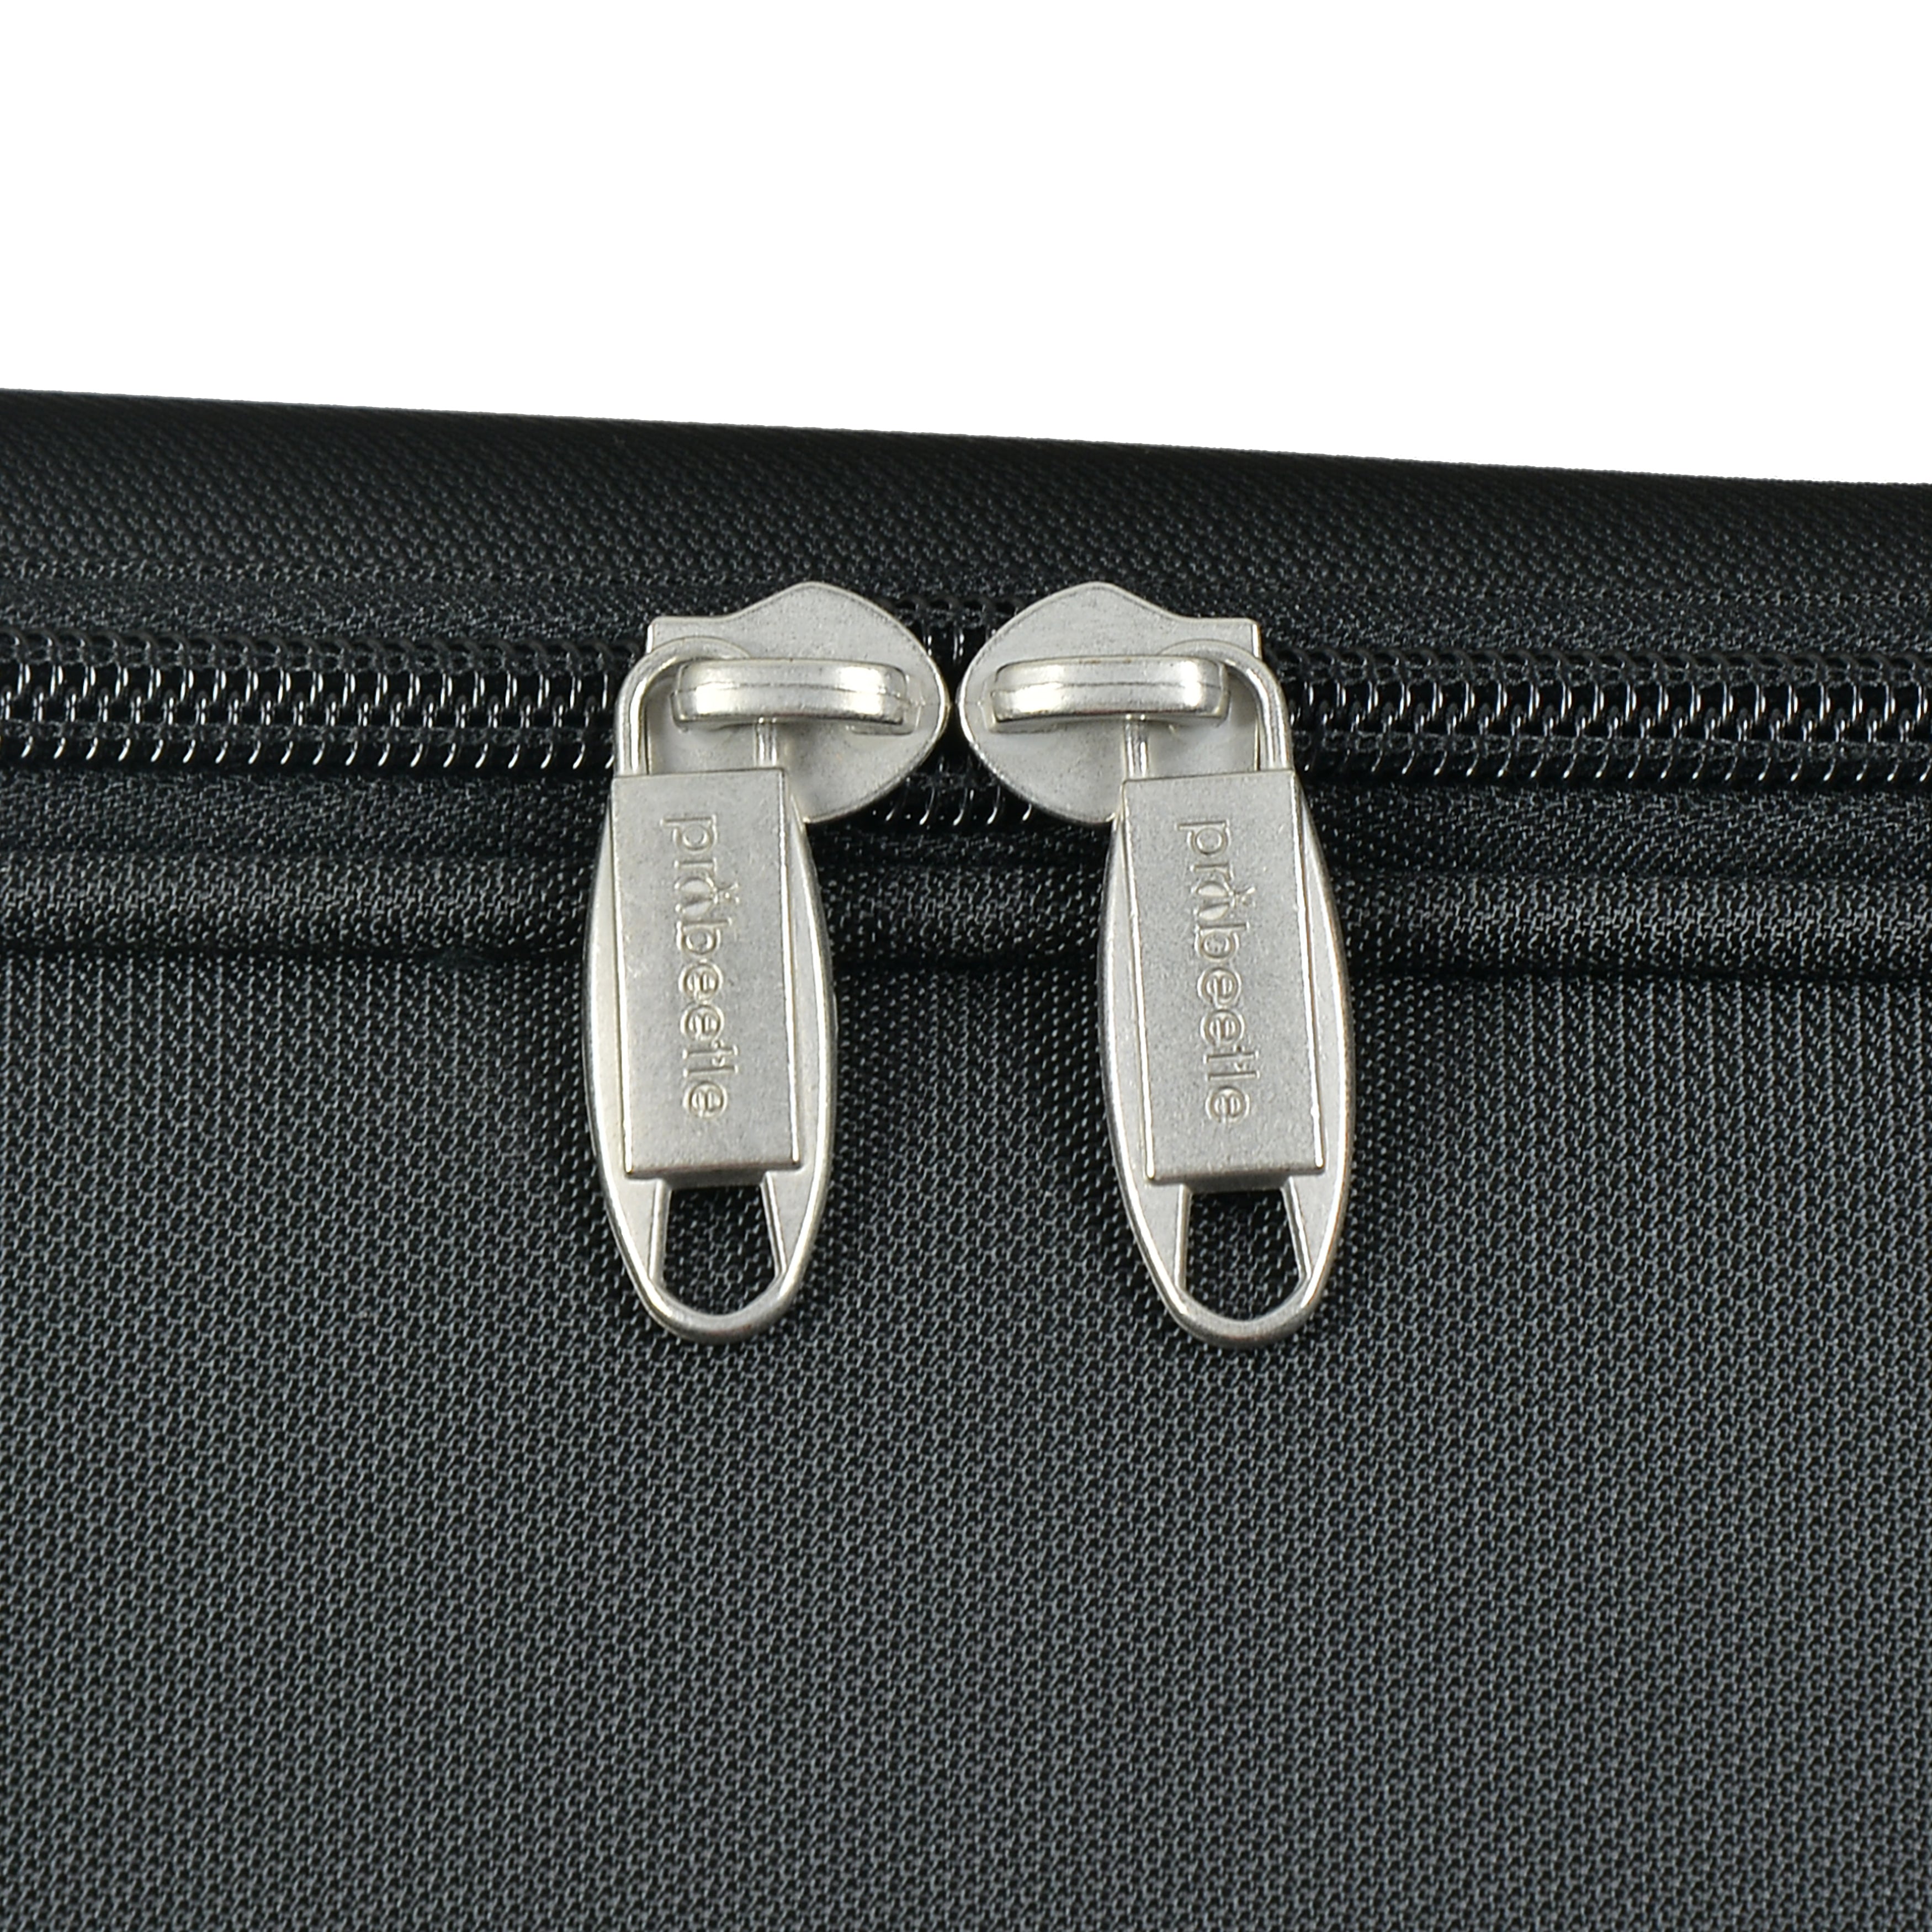 Probeetle Replacement Zipper Puller 557M#829710101P